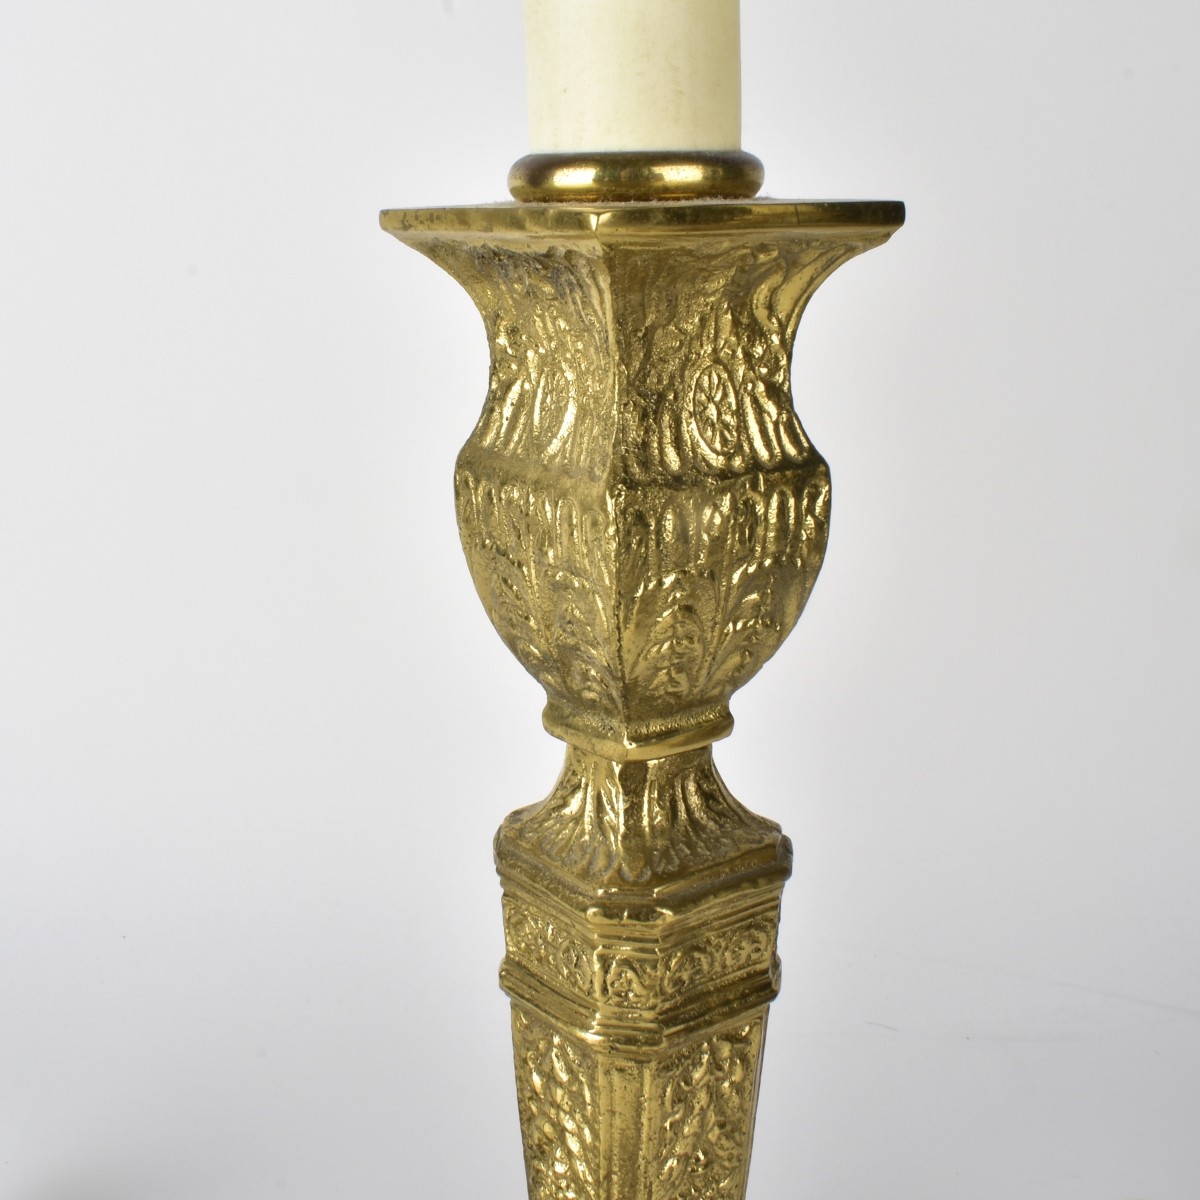 Four Vintage Brass Lamps